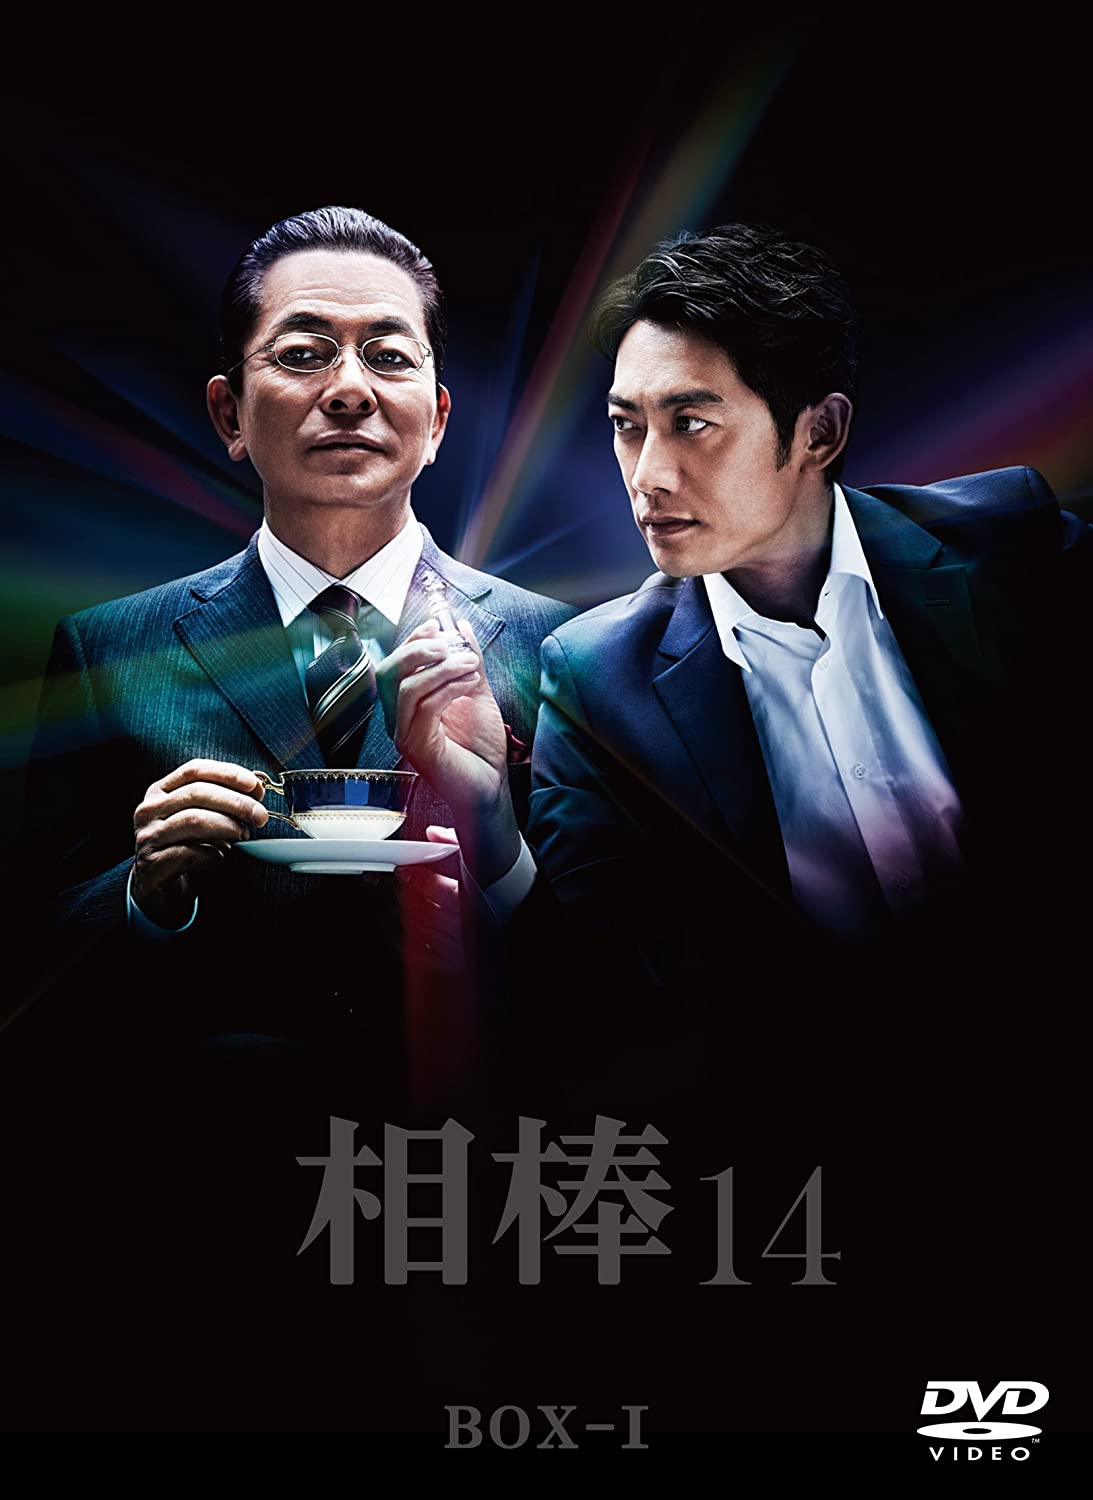 DVDBOX-1「相棒season14」